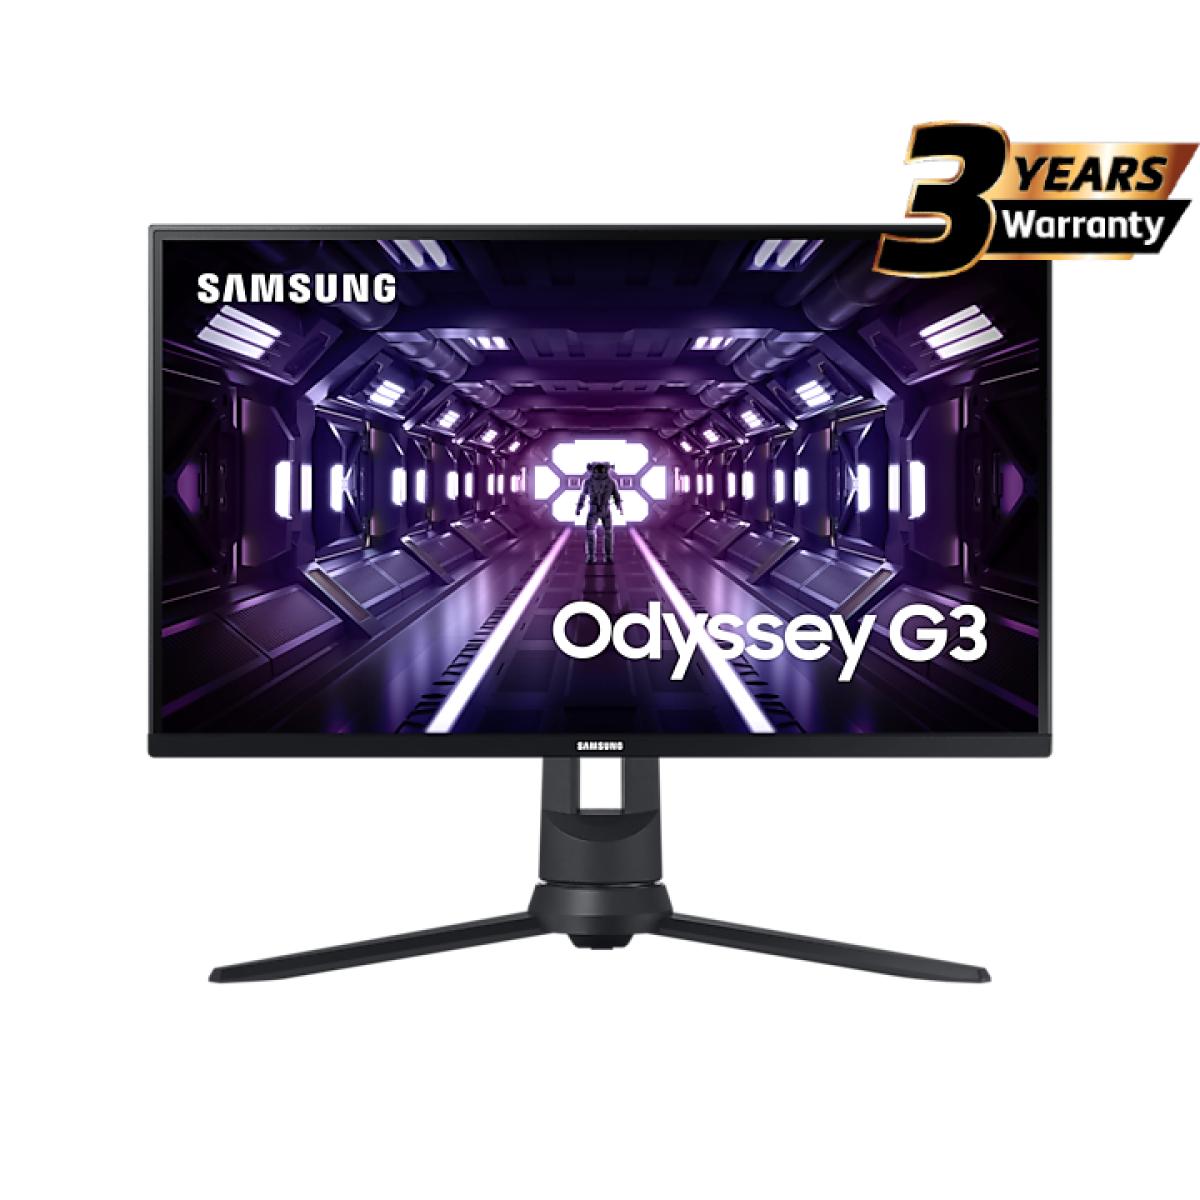 Samsung 27" Odyssey G3 Monitor